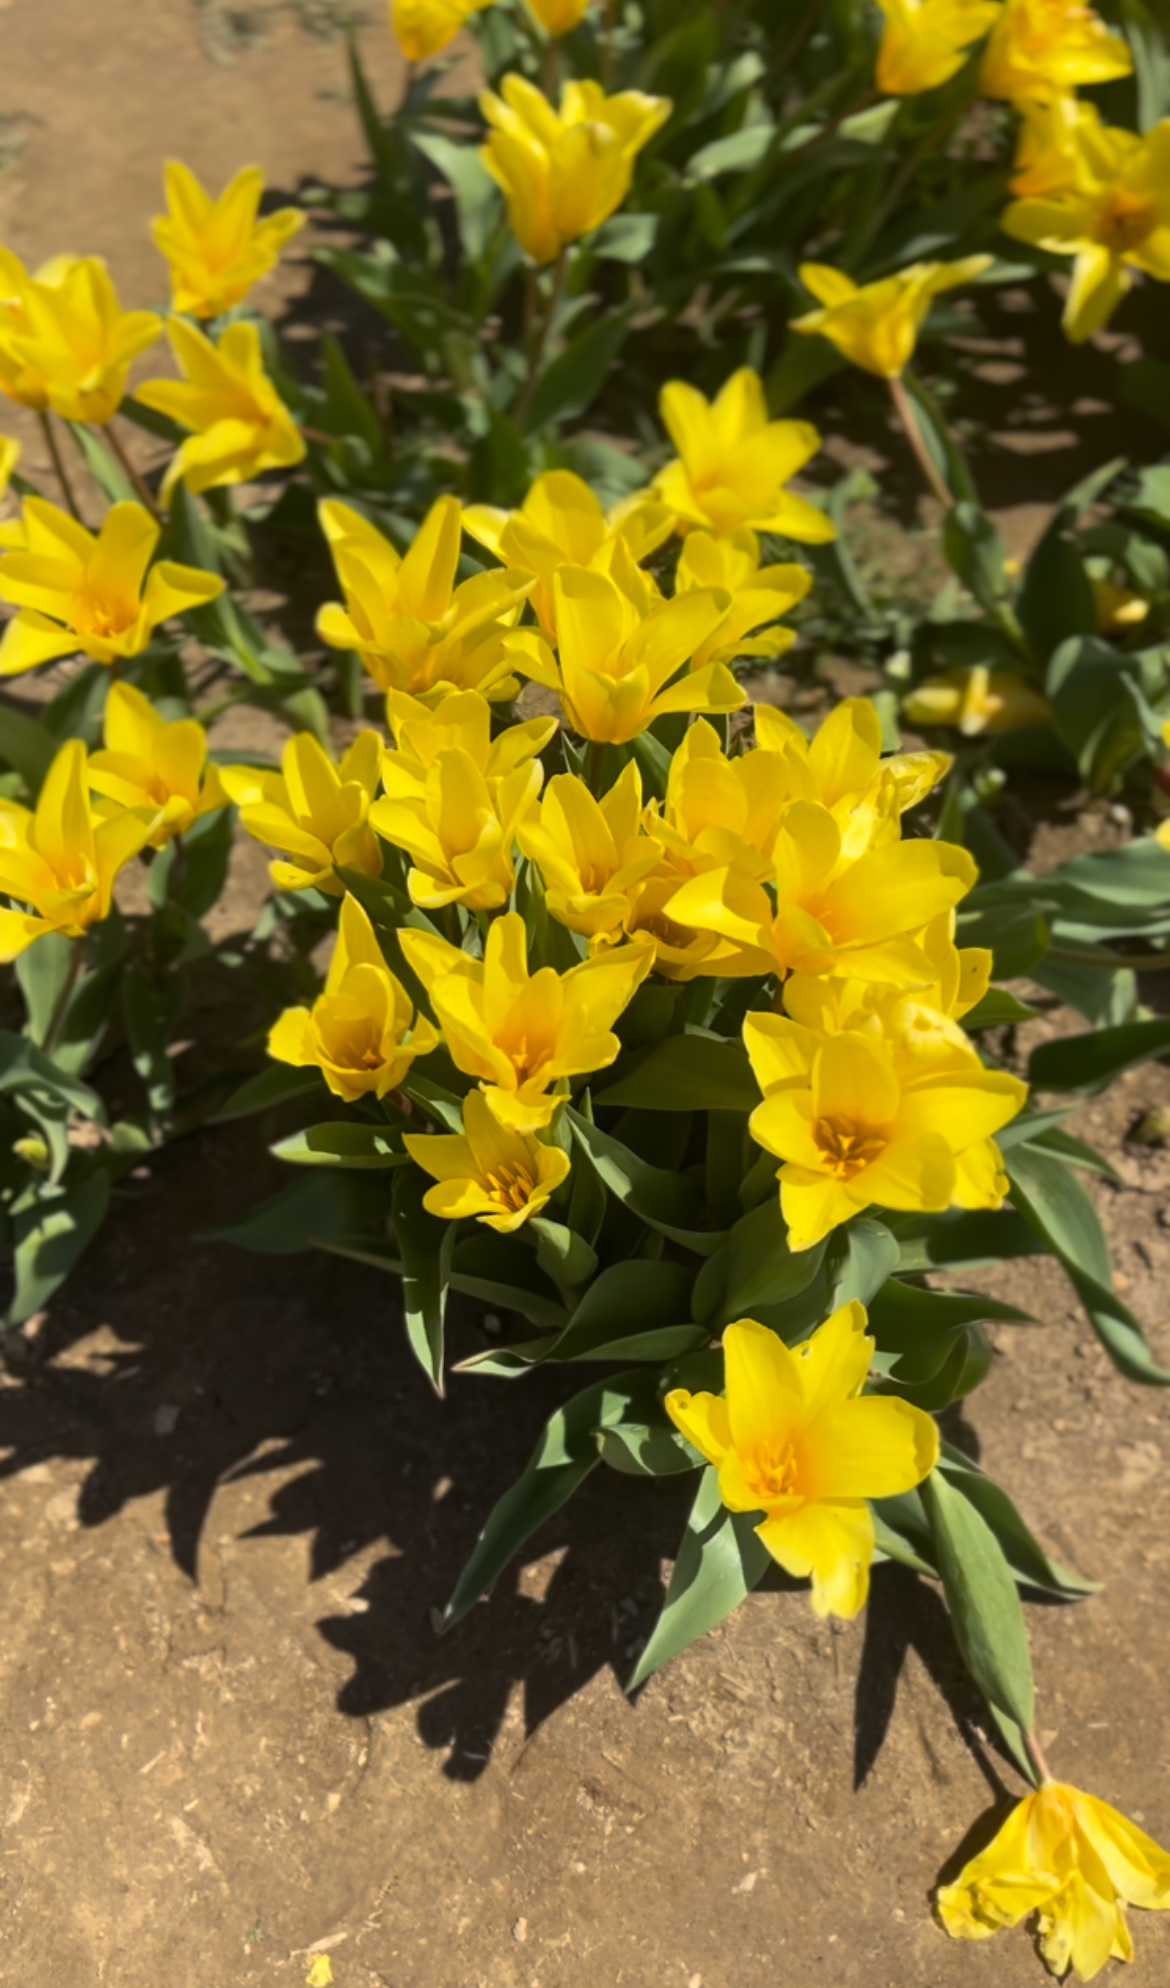 Yellow tulips represent happiness and joy, my photo from Holland Ridge Farm